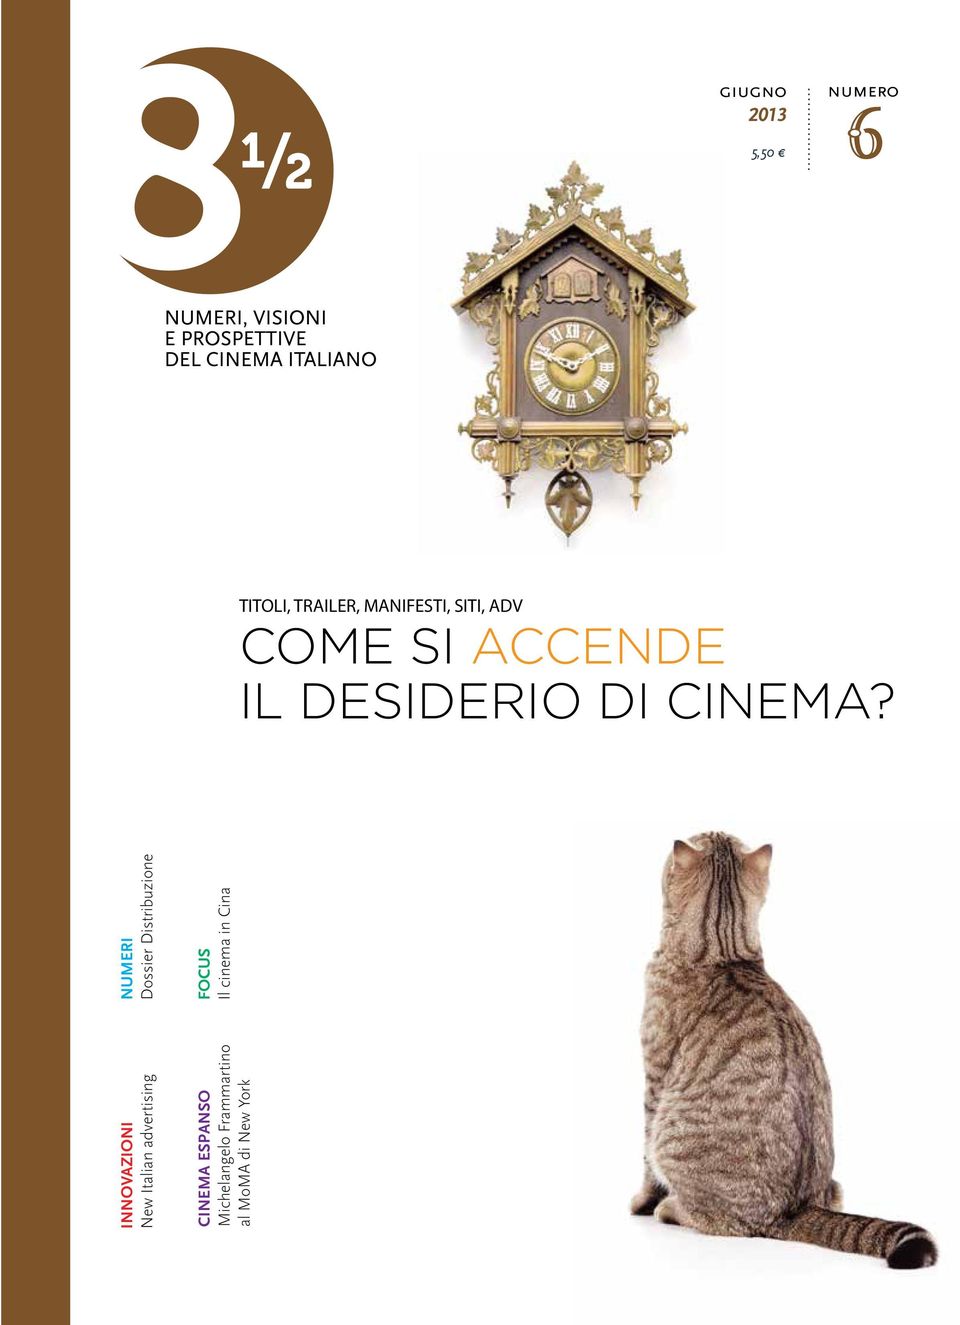 INNOVAZIONI New Italian advertising CINEMA ESPANSO